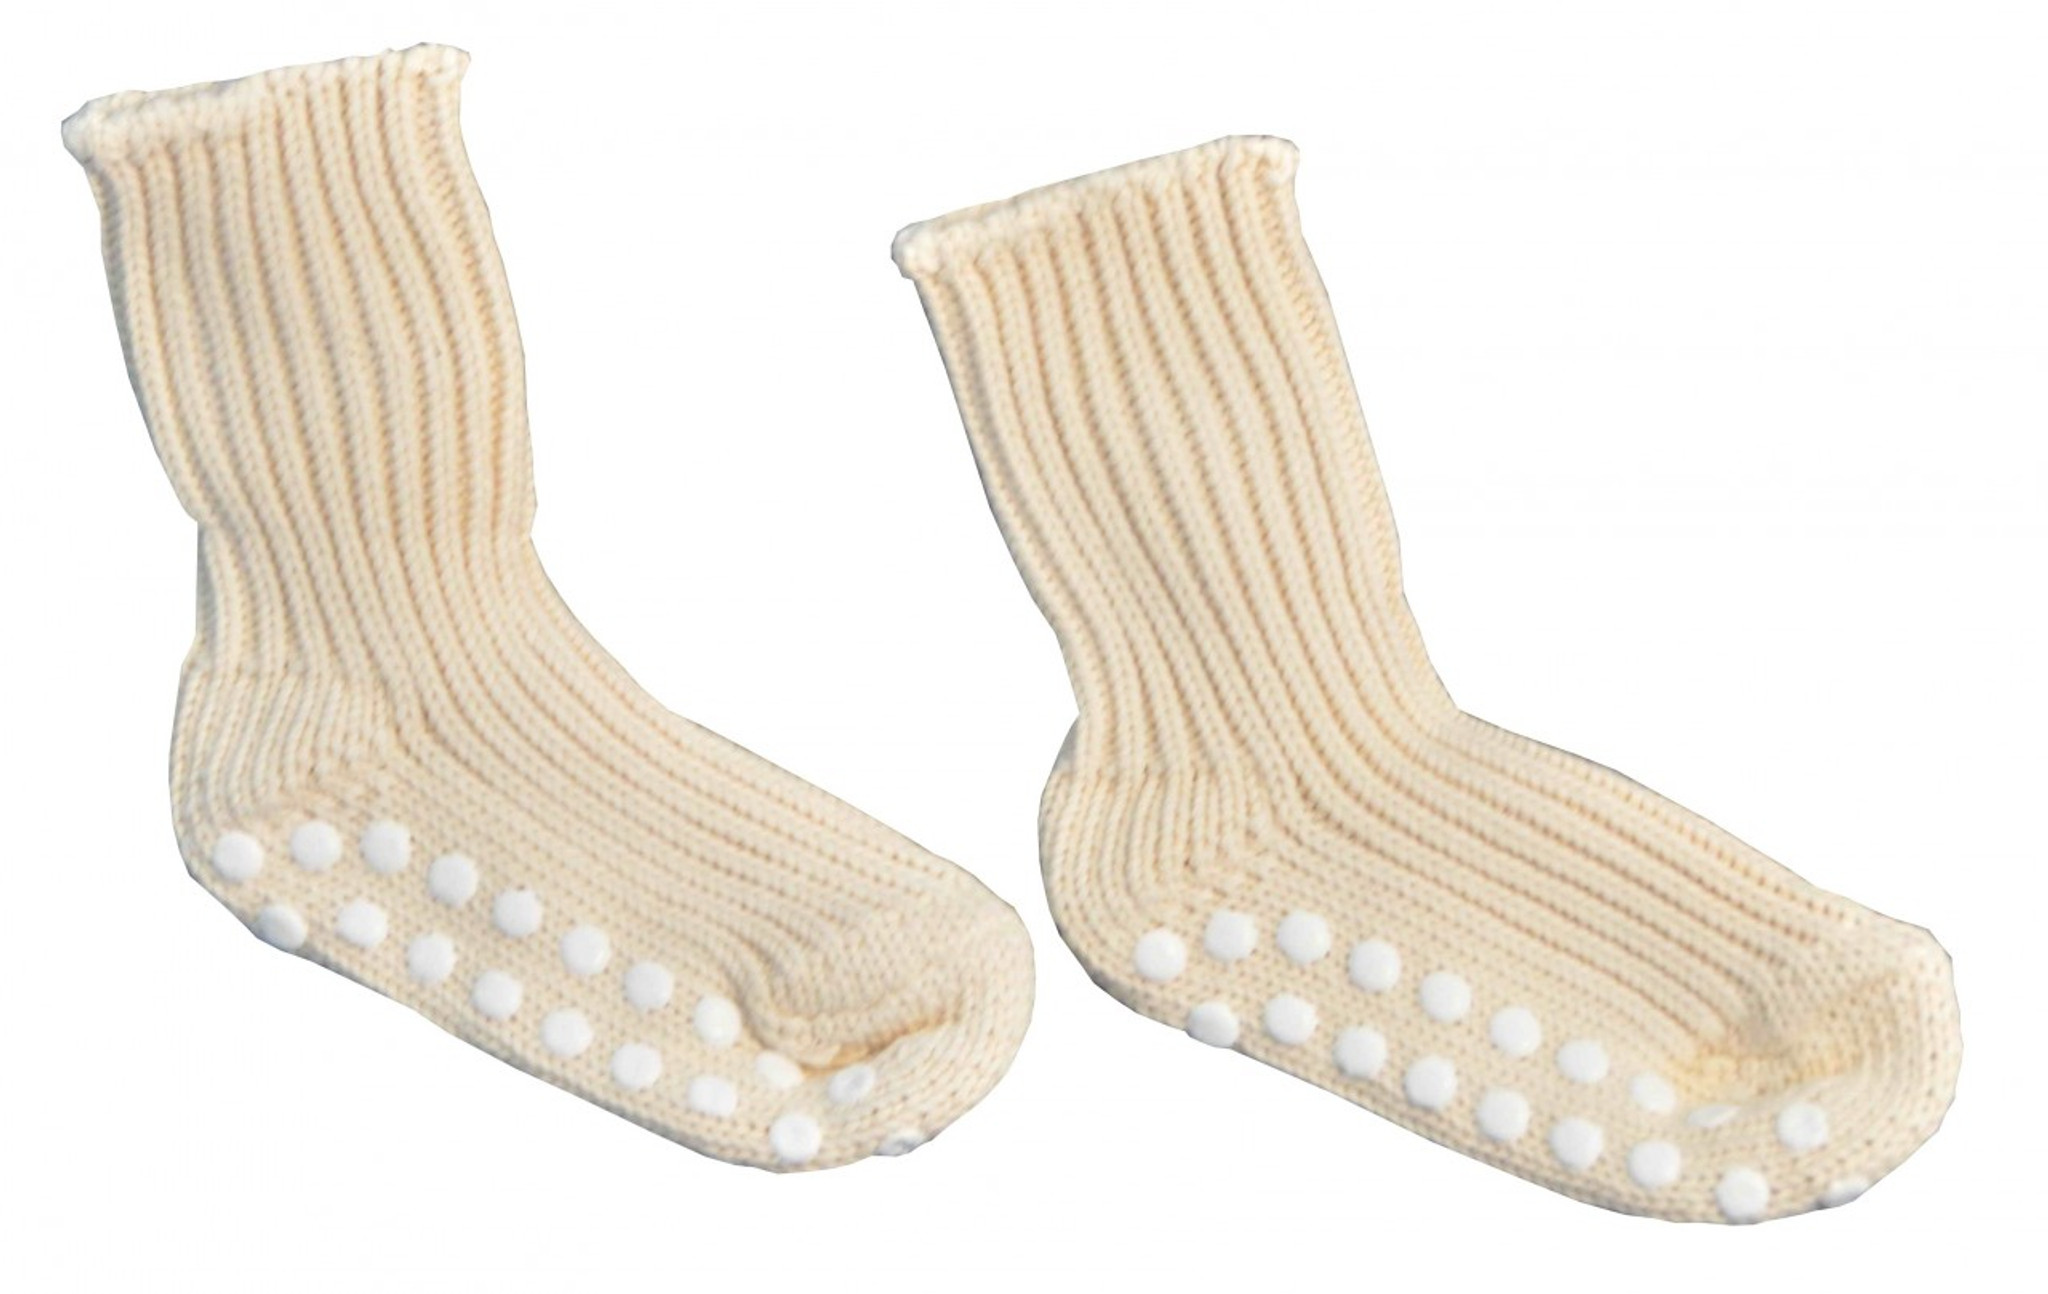 children's socks with grips